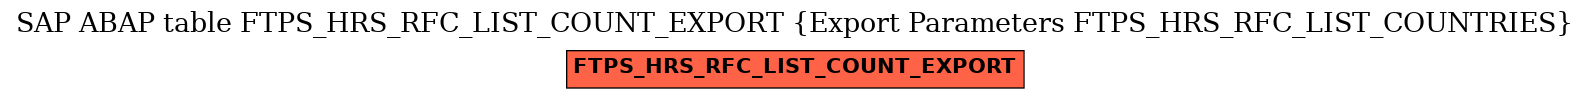 E-R Diagram for table FTPS_HRS_RFC_LIST_COUNT_EXPORT (Export Parameters FTPS_HRS_RFC_LIST_COUNTRIES)